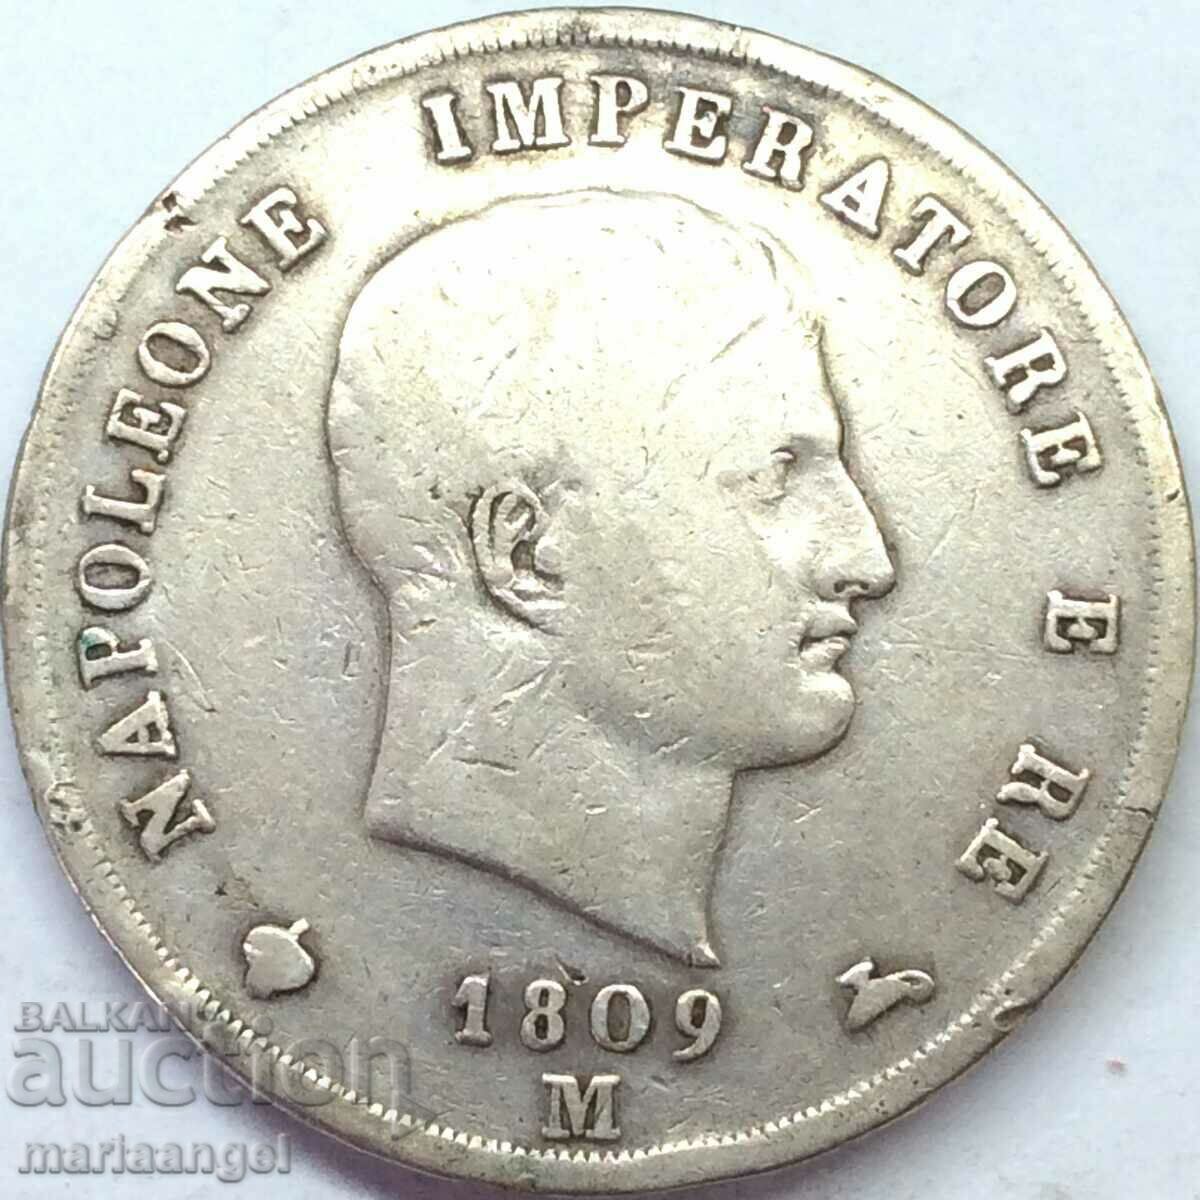 Napoleon 5 lira 1809 M-Milan Italy ασήμι